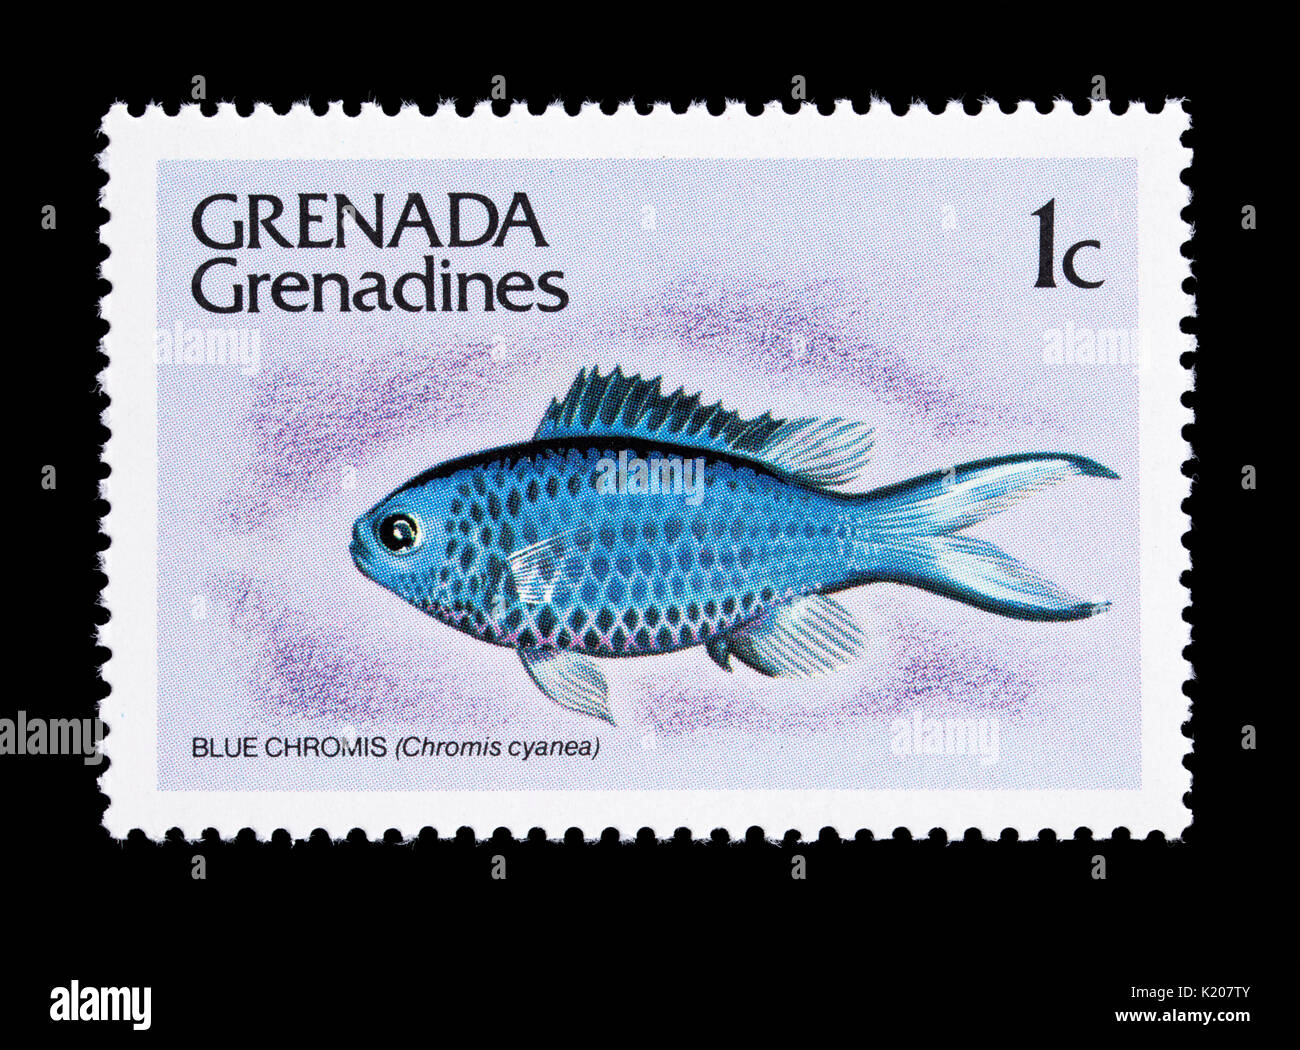 Postage stamp from Grenada Grenadines depicting a blue chromis (Chromis cyanea) Stock Photo